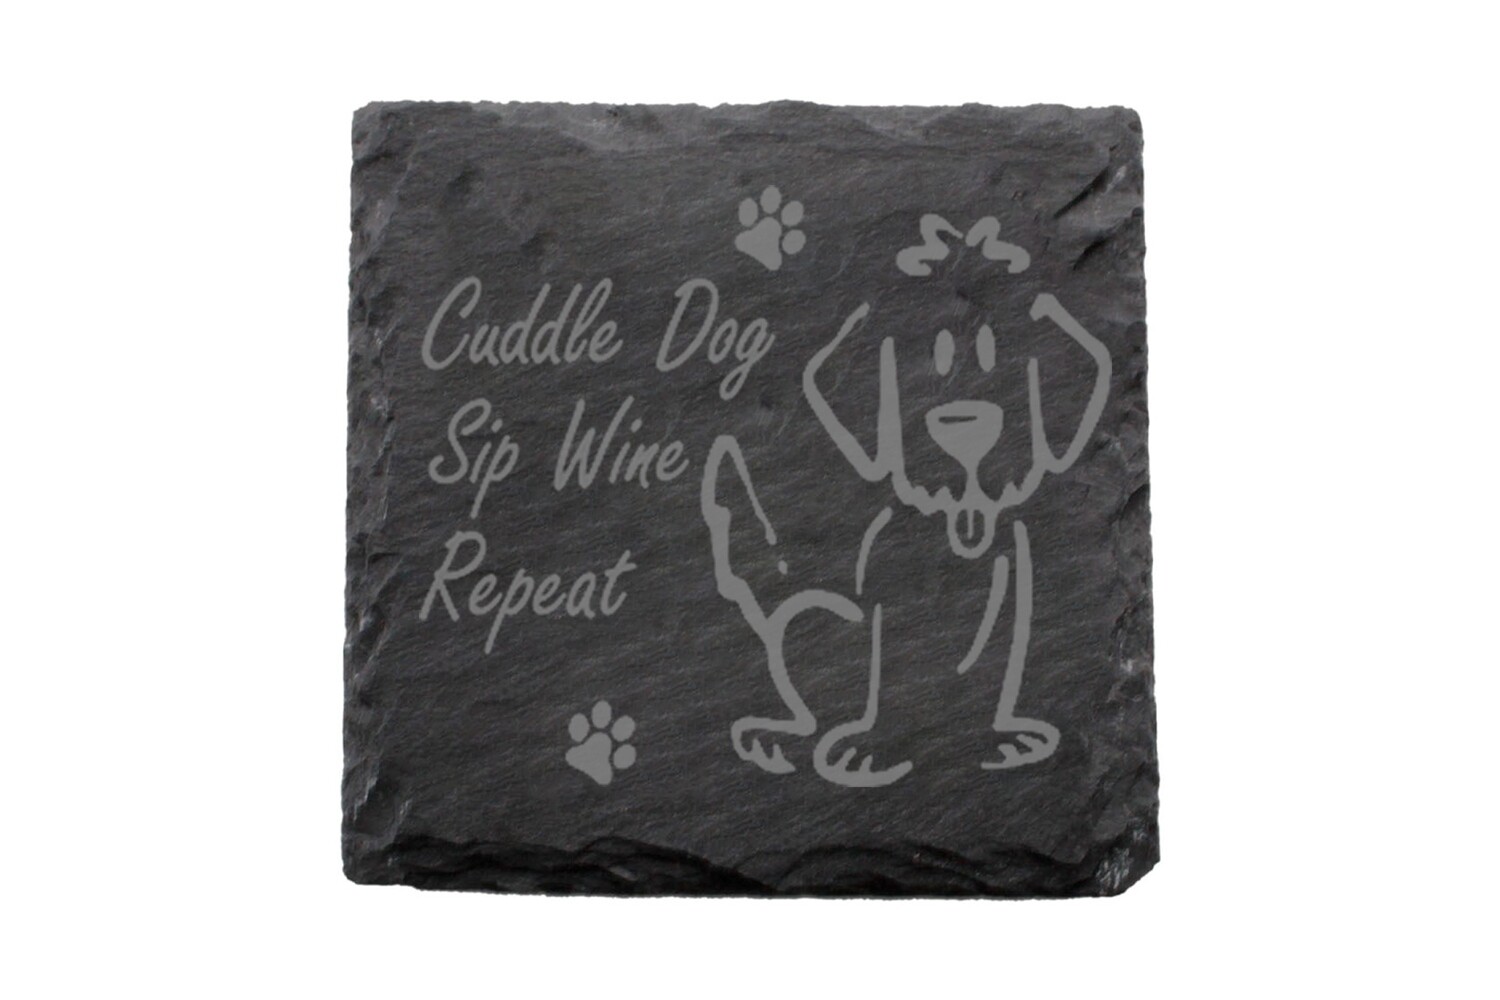 Cuddle Dog Sip Wine Repeat Saying Slate Coaster Set